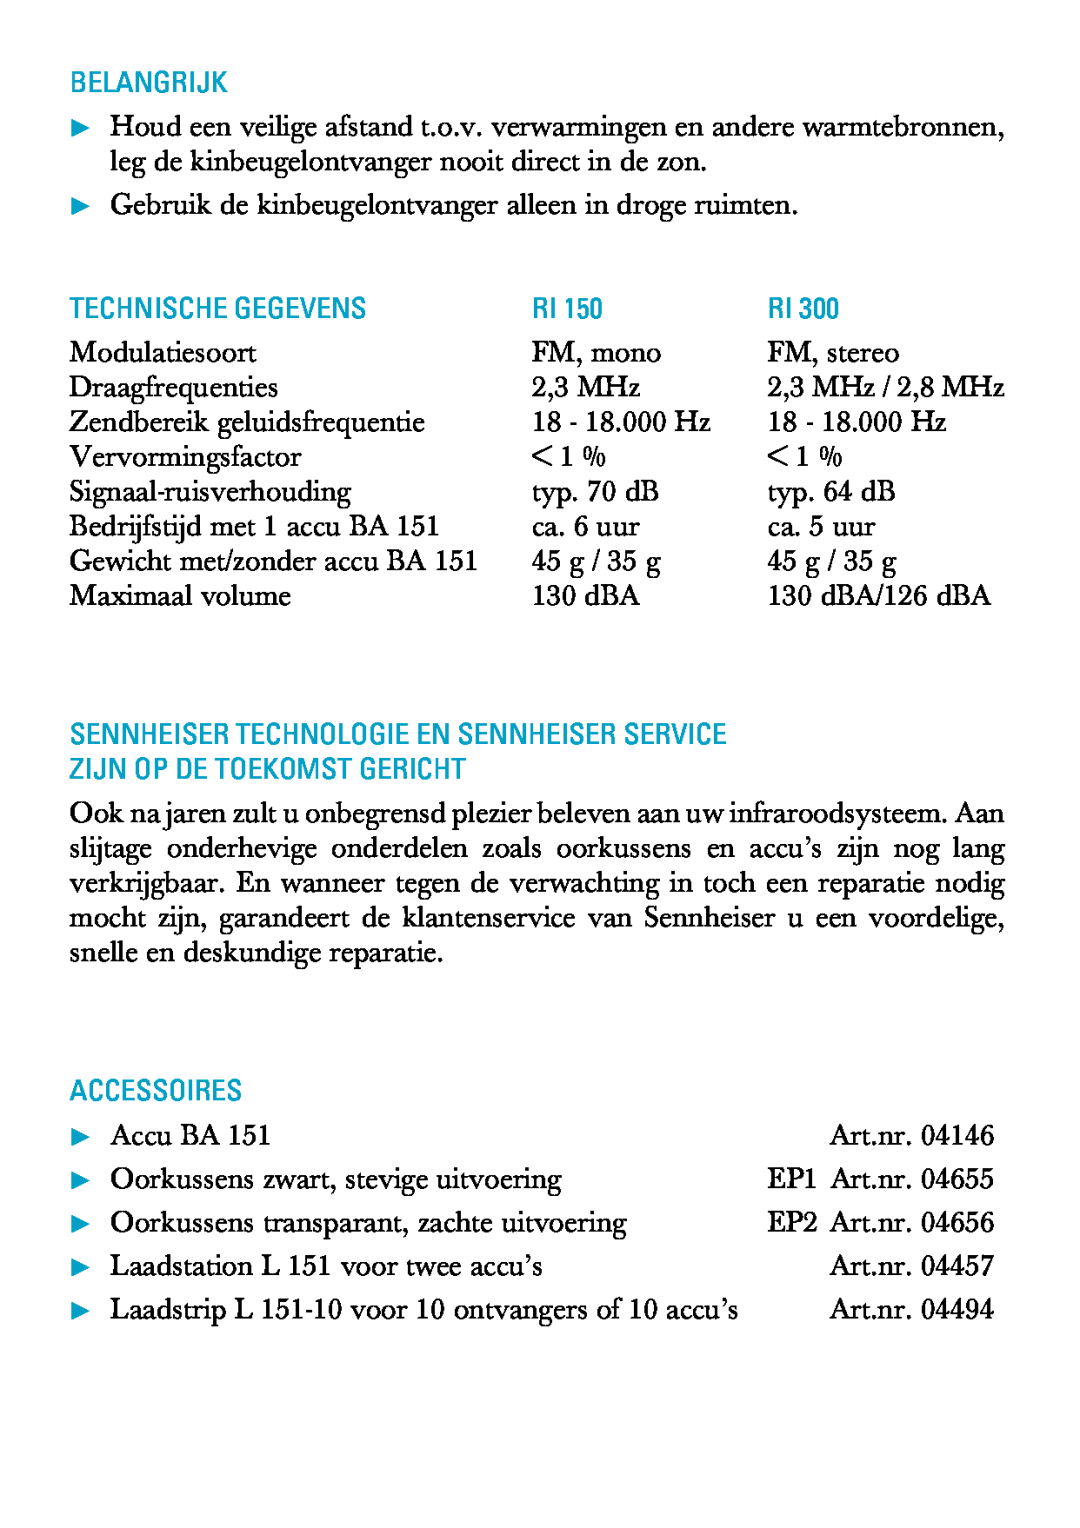 Sennheiser RI 300 manual Belangrijk, Technische Gegevens, Sennheiser Technologie En Sennheiser Service, Accessoires 